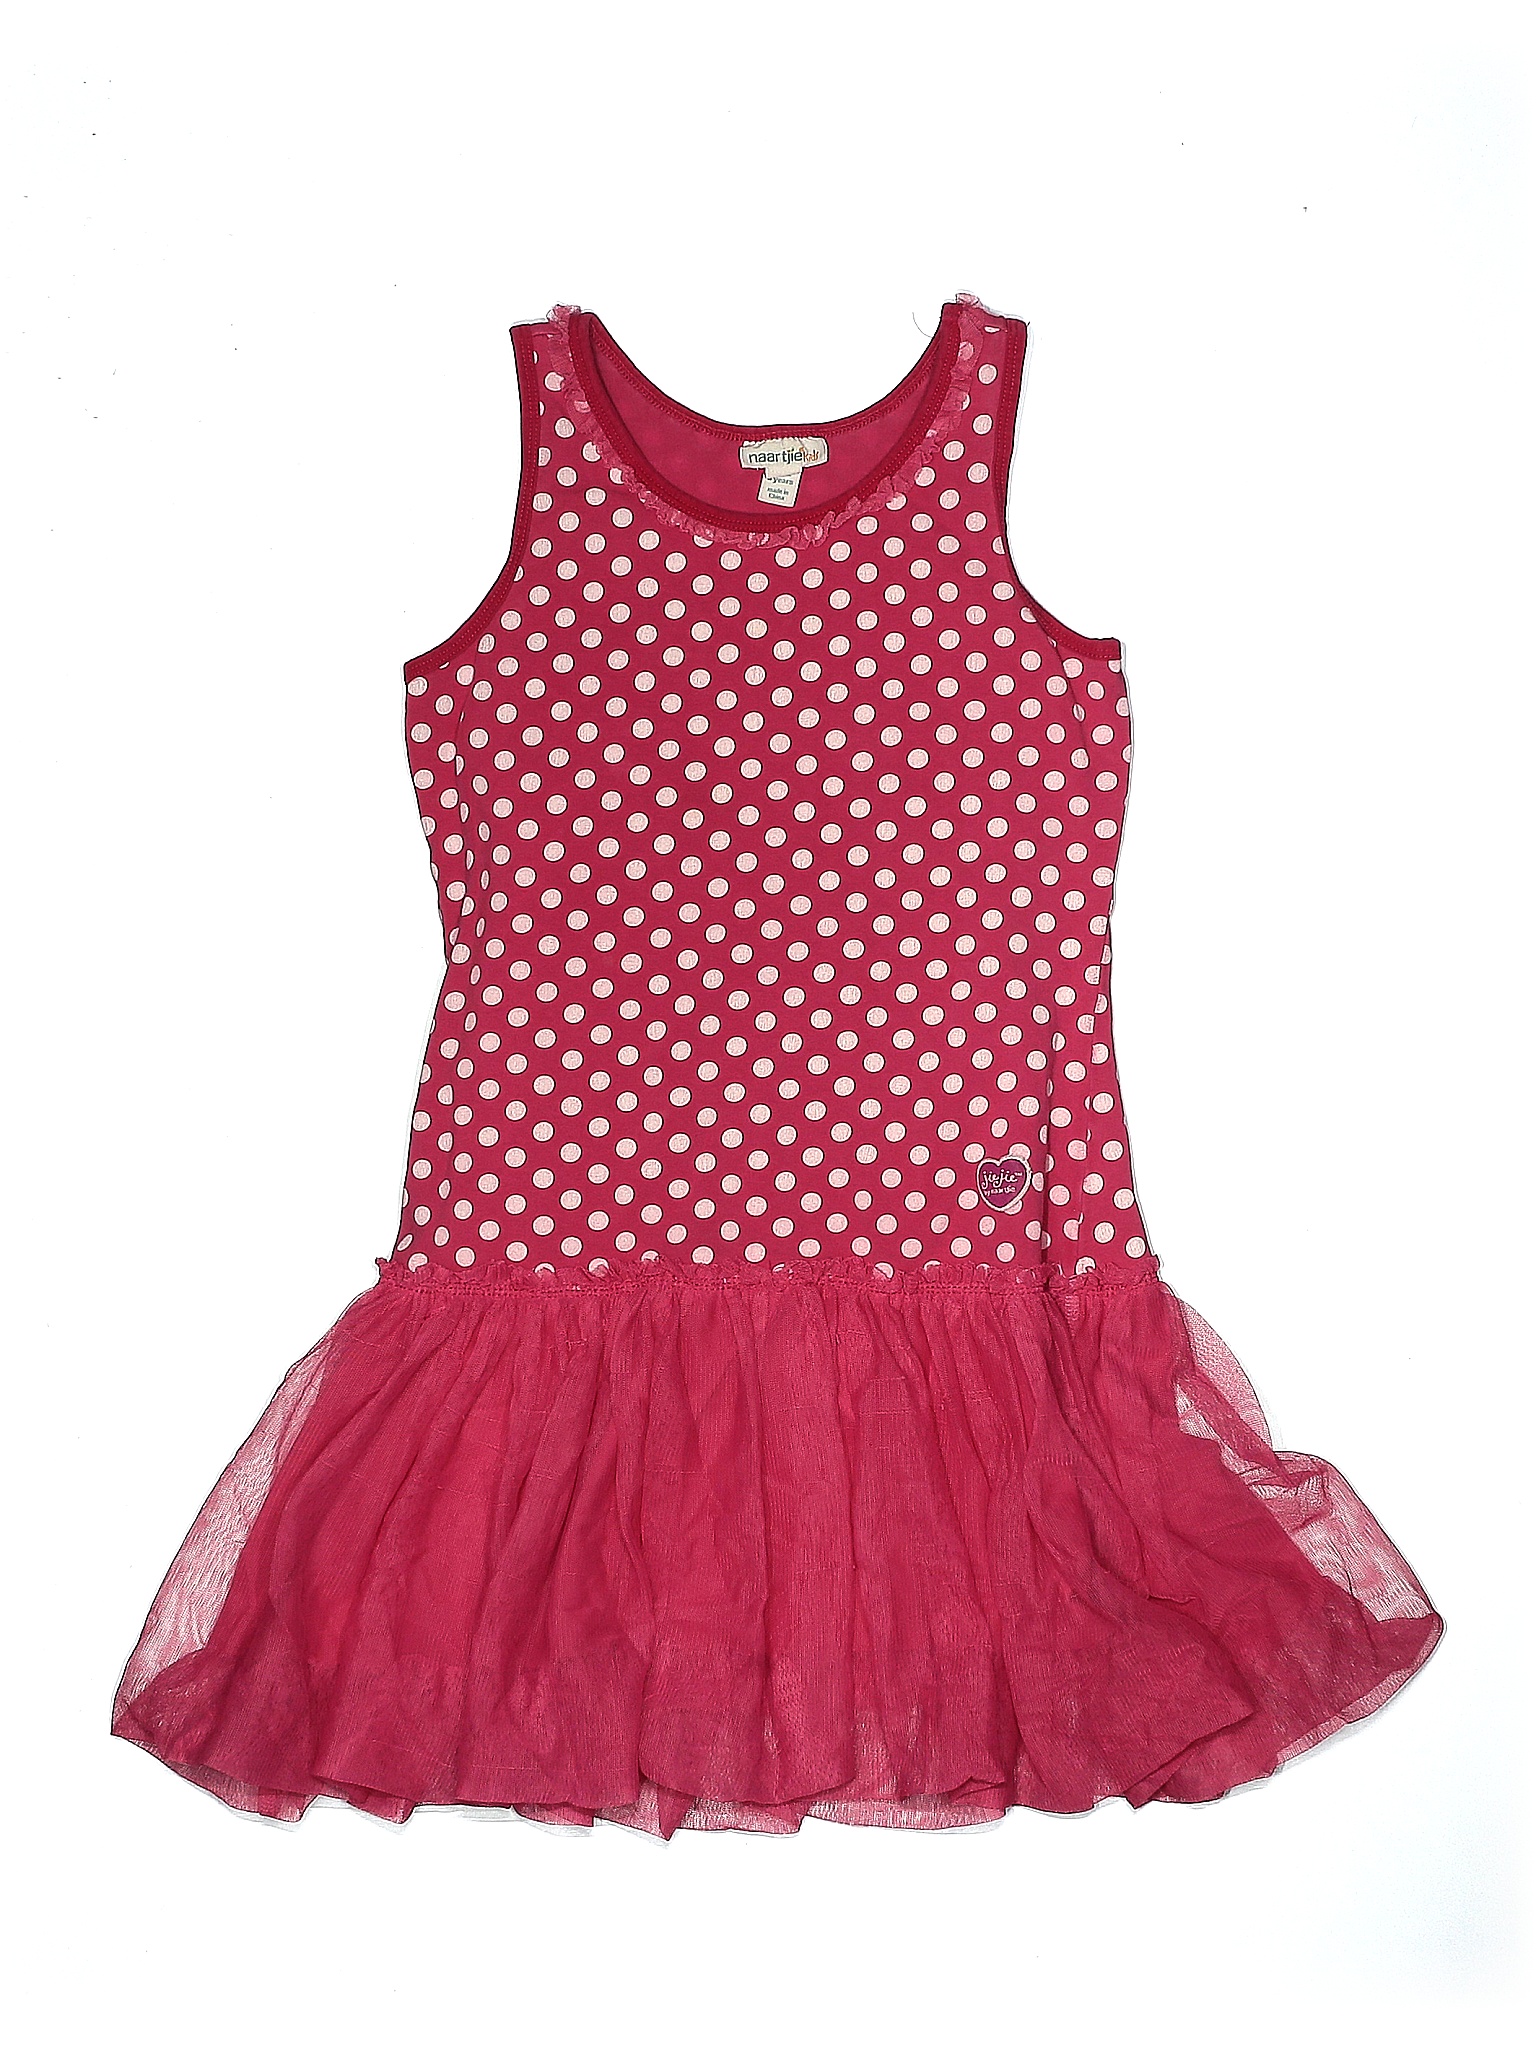 Naartjie Kids Girls' Clothing On Sale Up To 90% Off Retail | thredUP